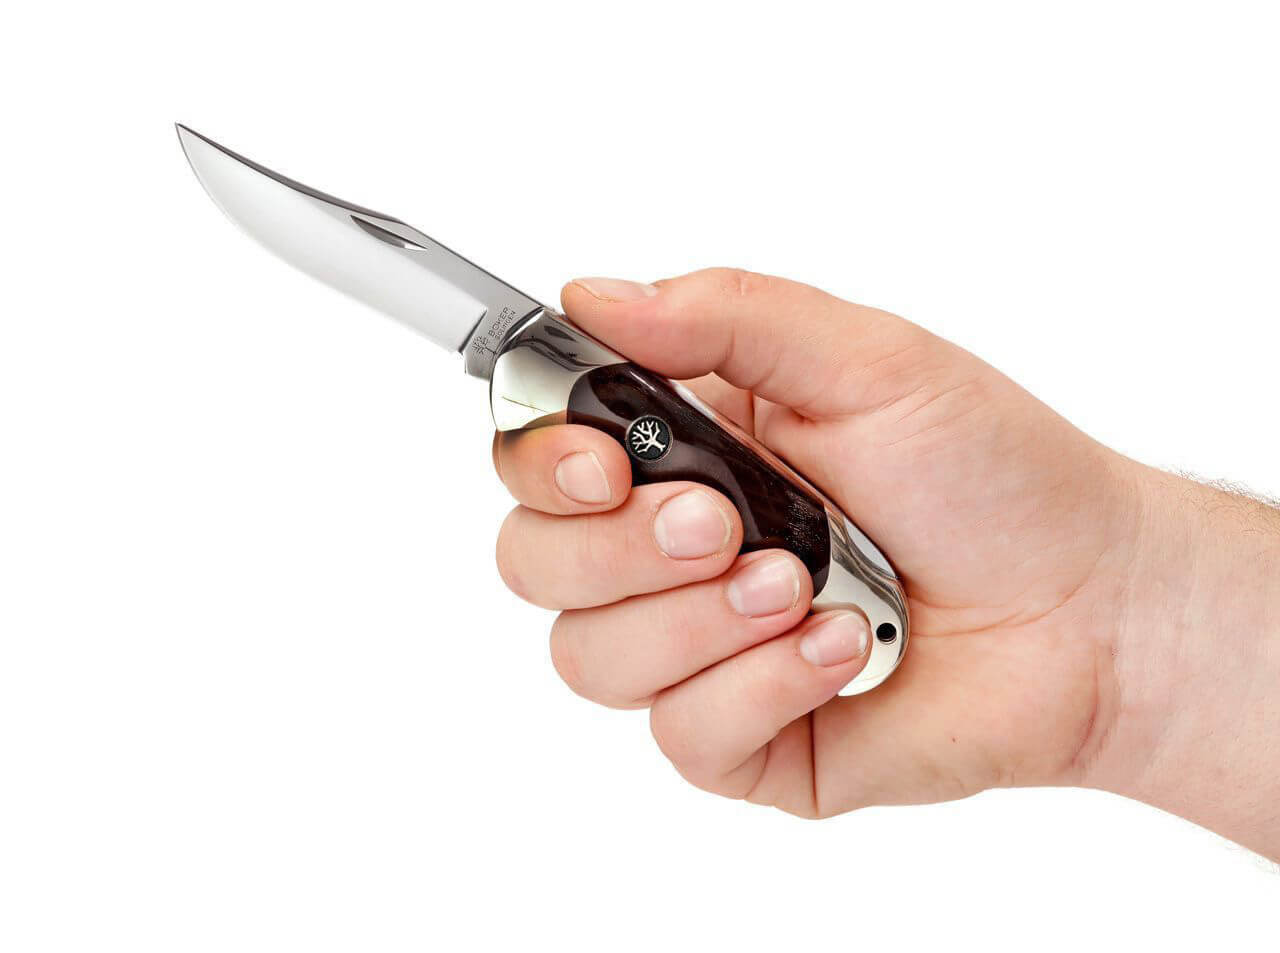  Boker 112007 Buffalo Horn Hunter Blade Pocket Knife : Hunting  Knives : Sports & Outdoors